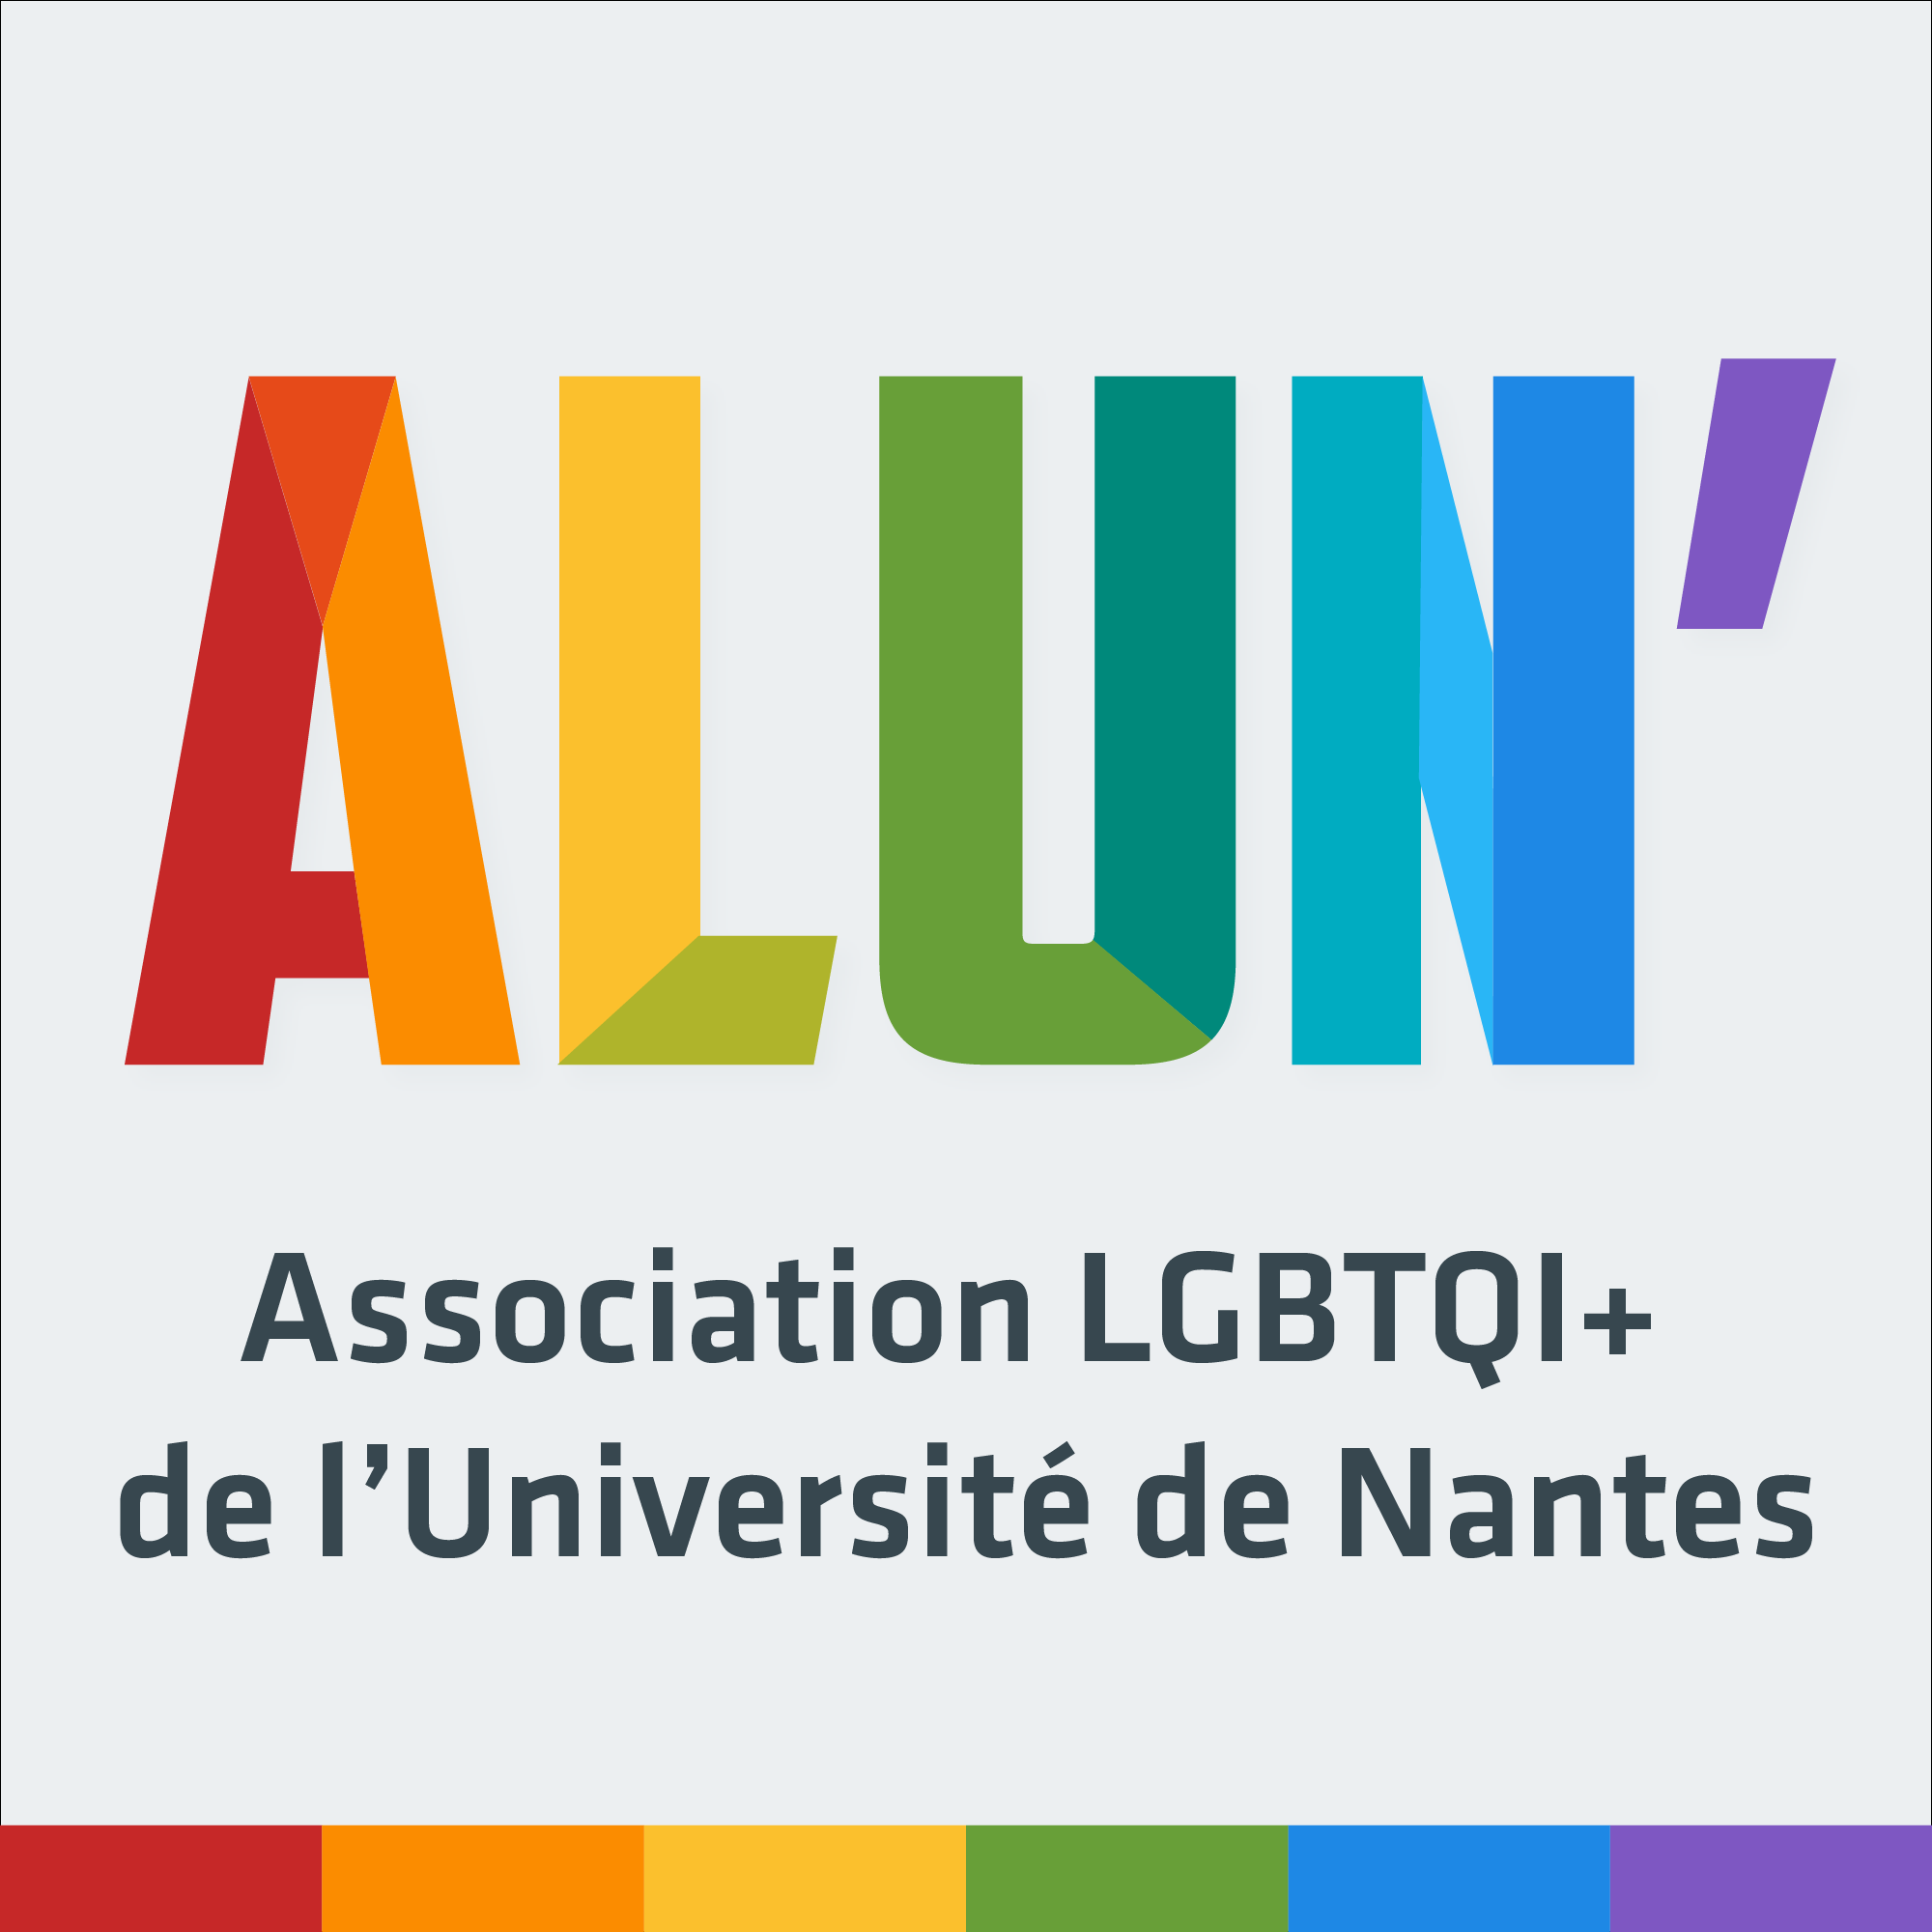 Association LGBTQI+ de l'Université de Nantes